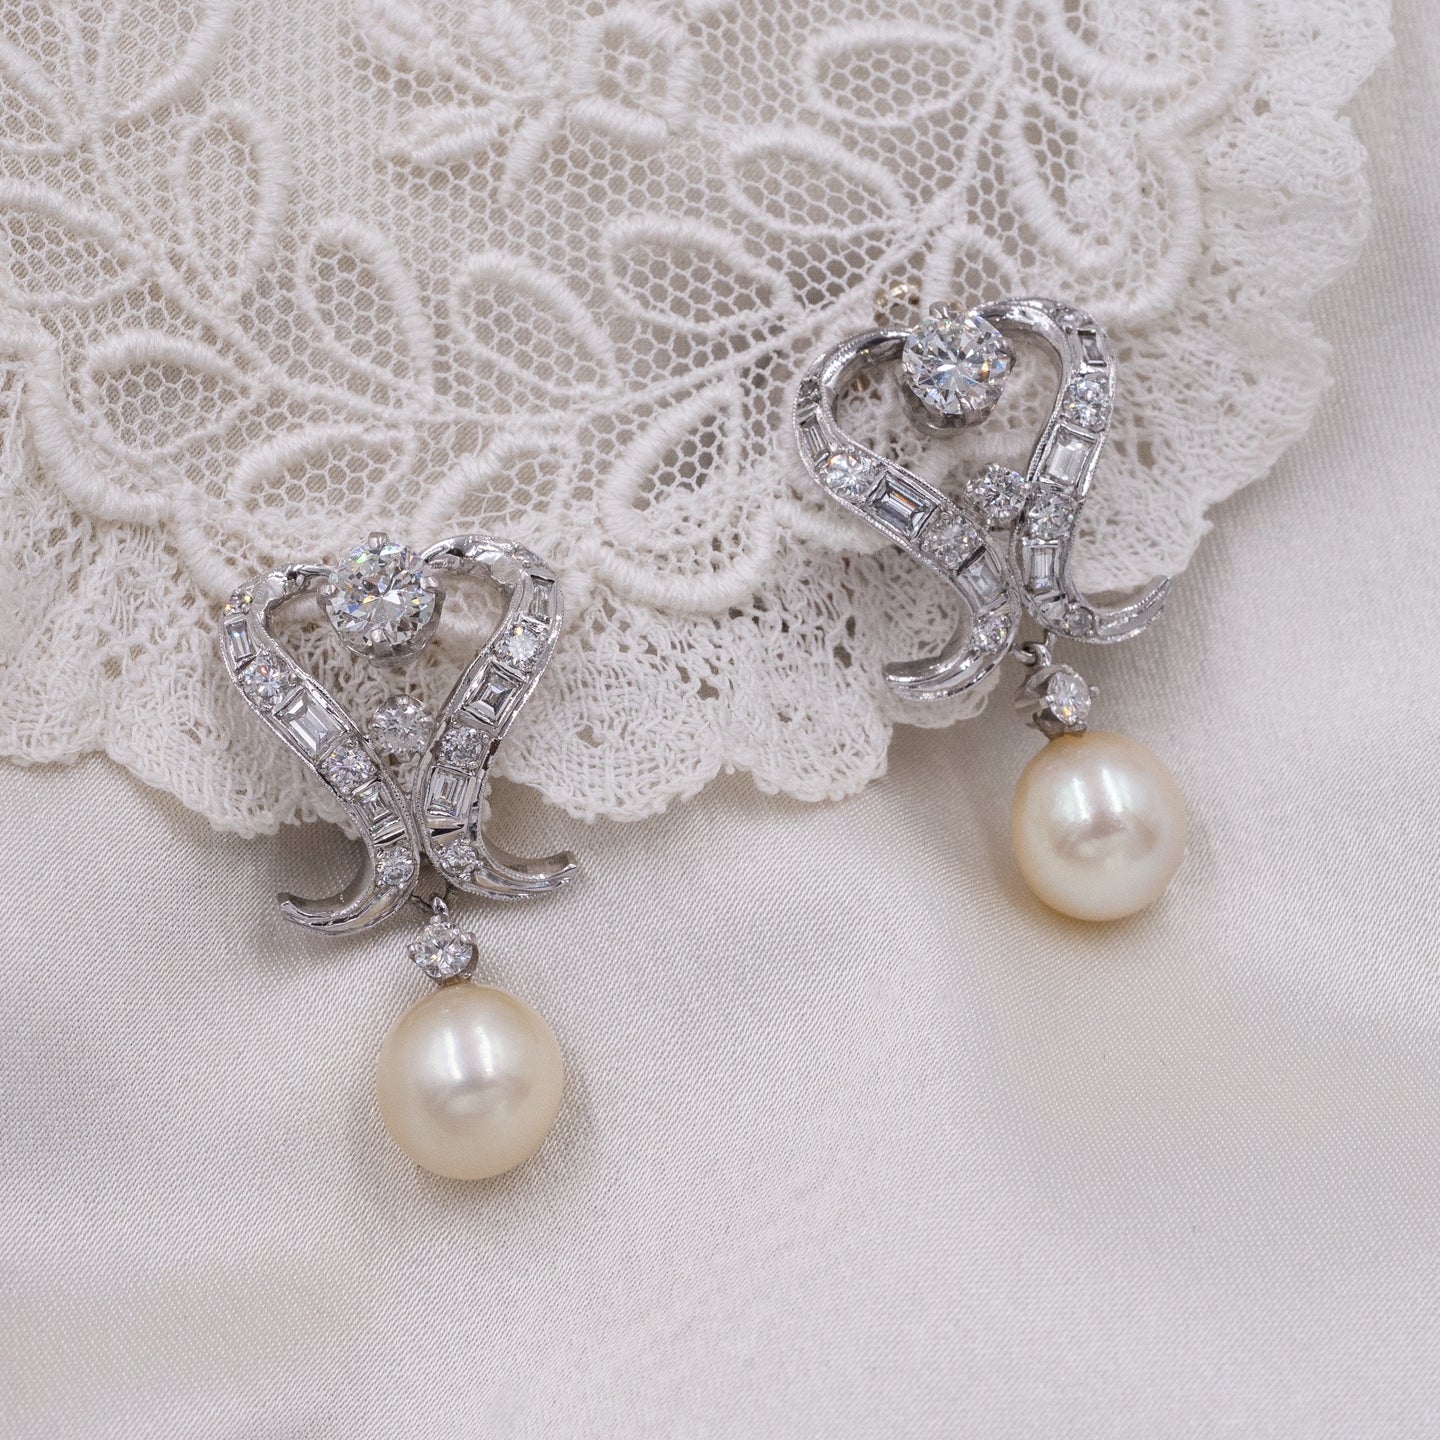 Diamond and Pearl Drop Earrings c1930